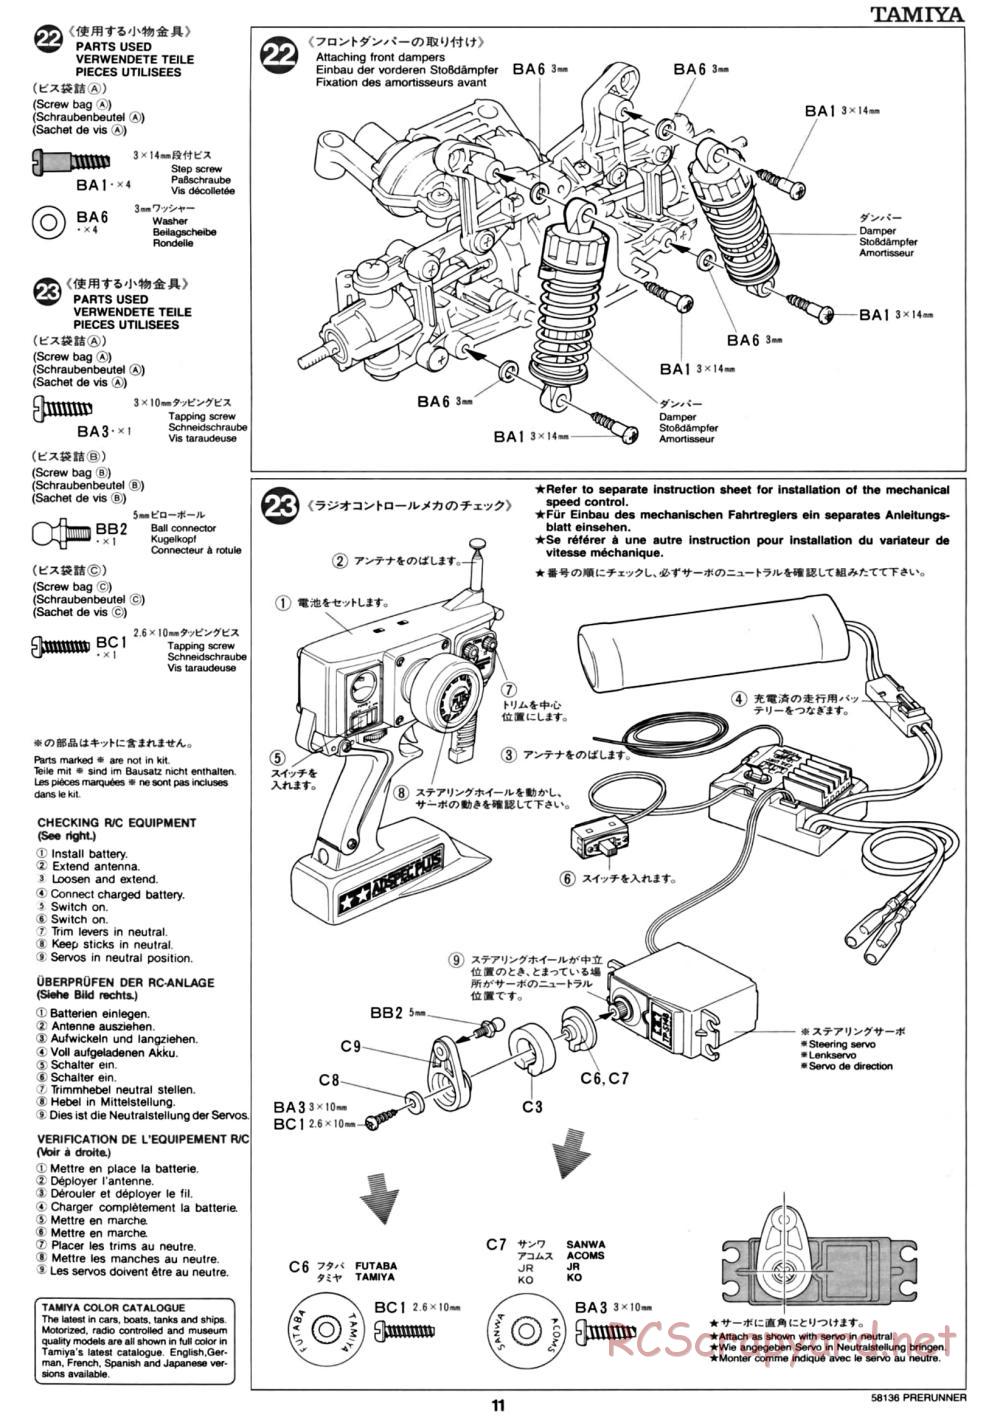 Tamiya - Toyota Prerunner Chassis - Manual - Page 11